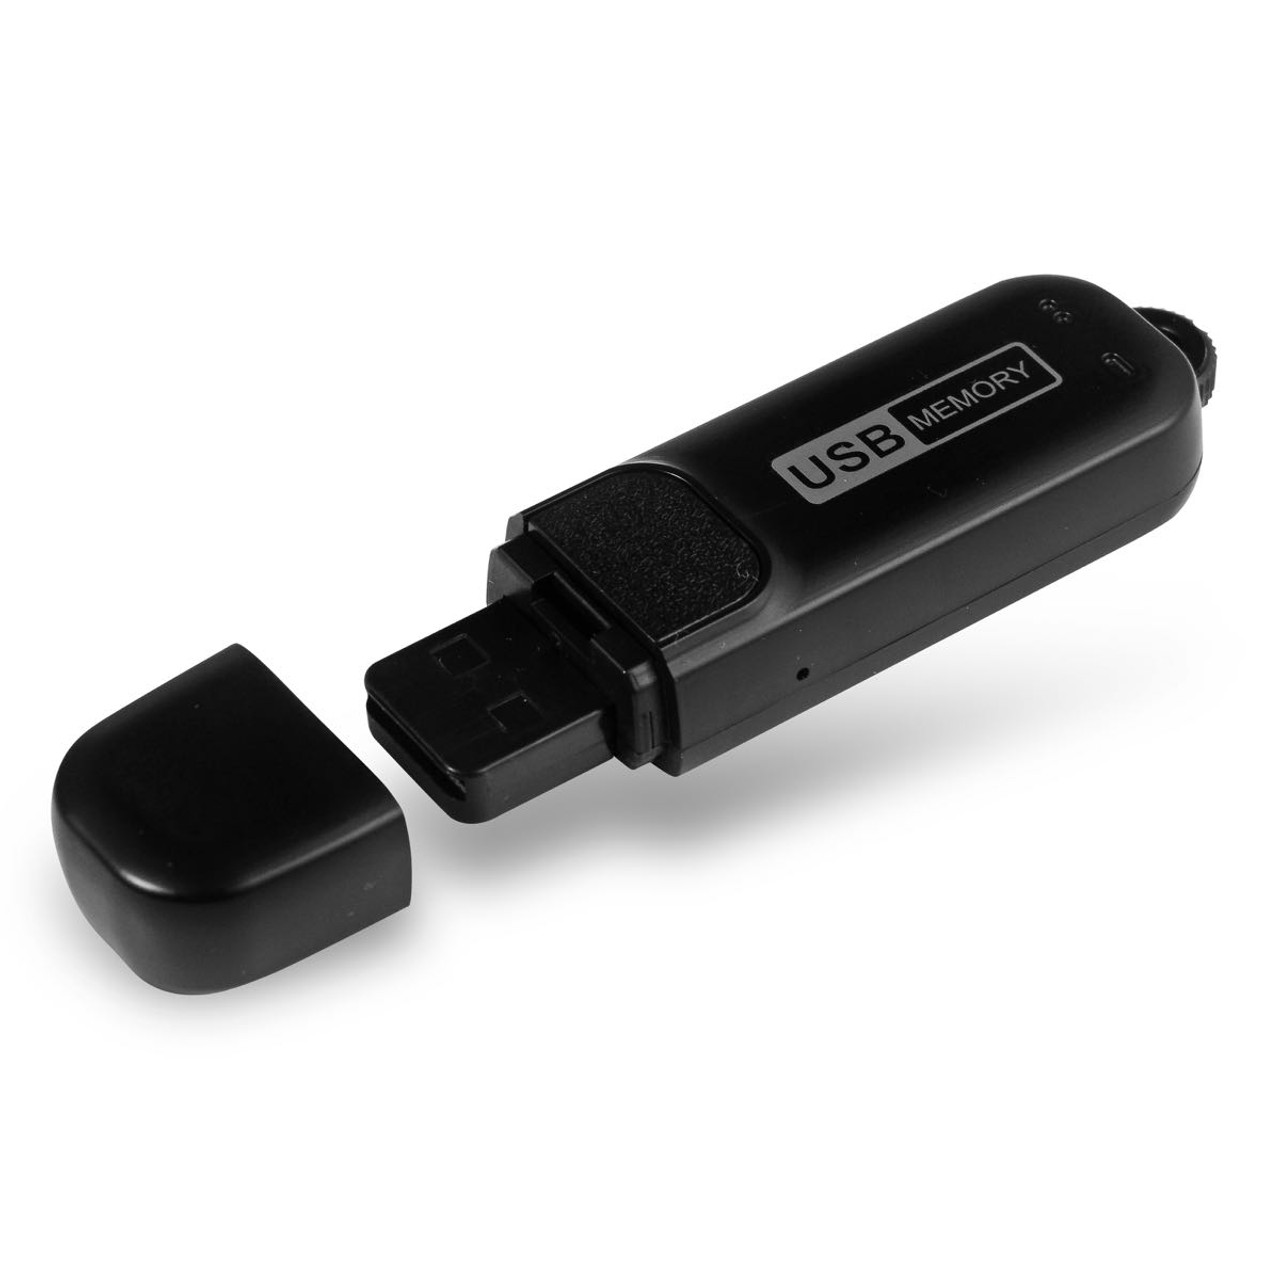 USB Drive Voice Voice Activated MQ-U300